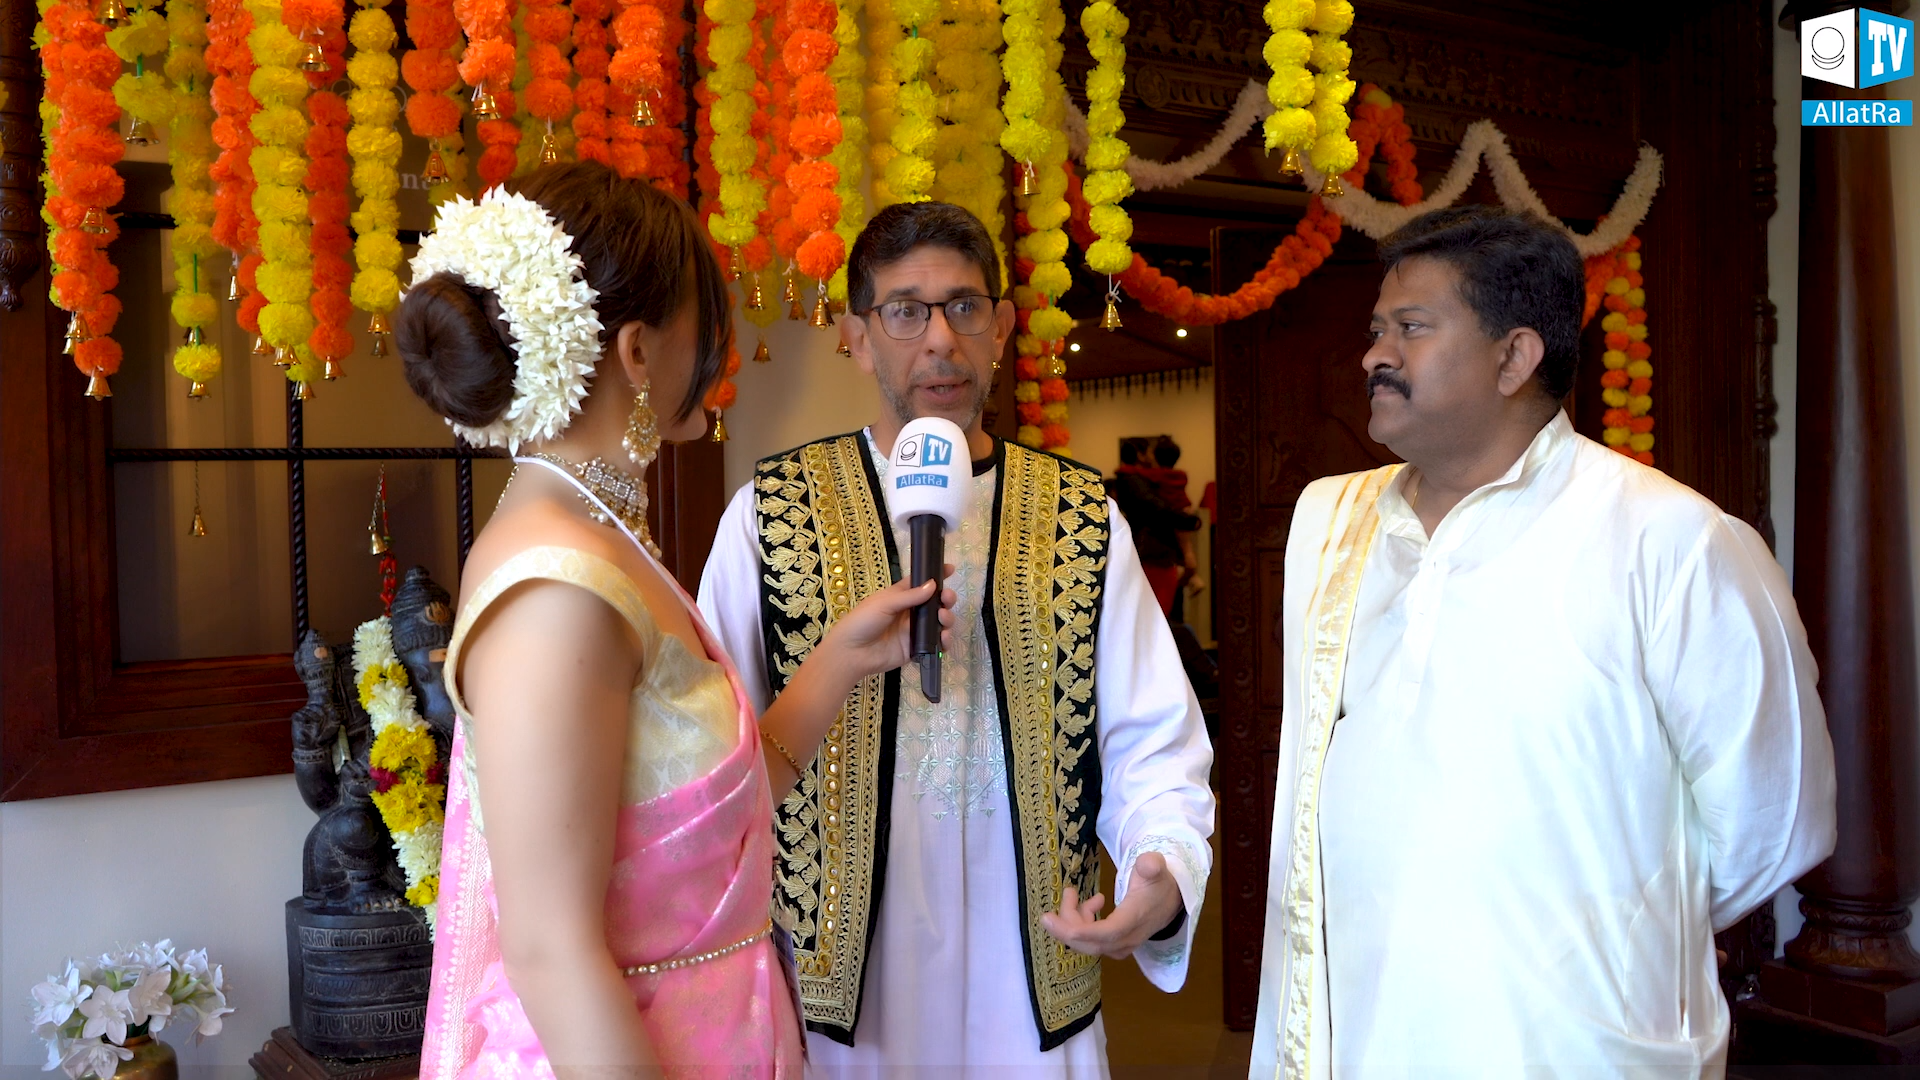 Guests of the Makar Sankranti celebration